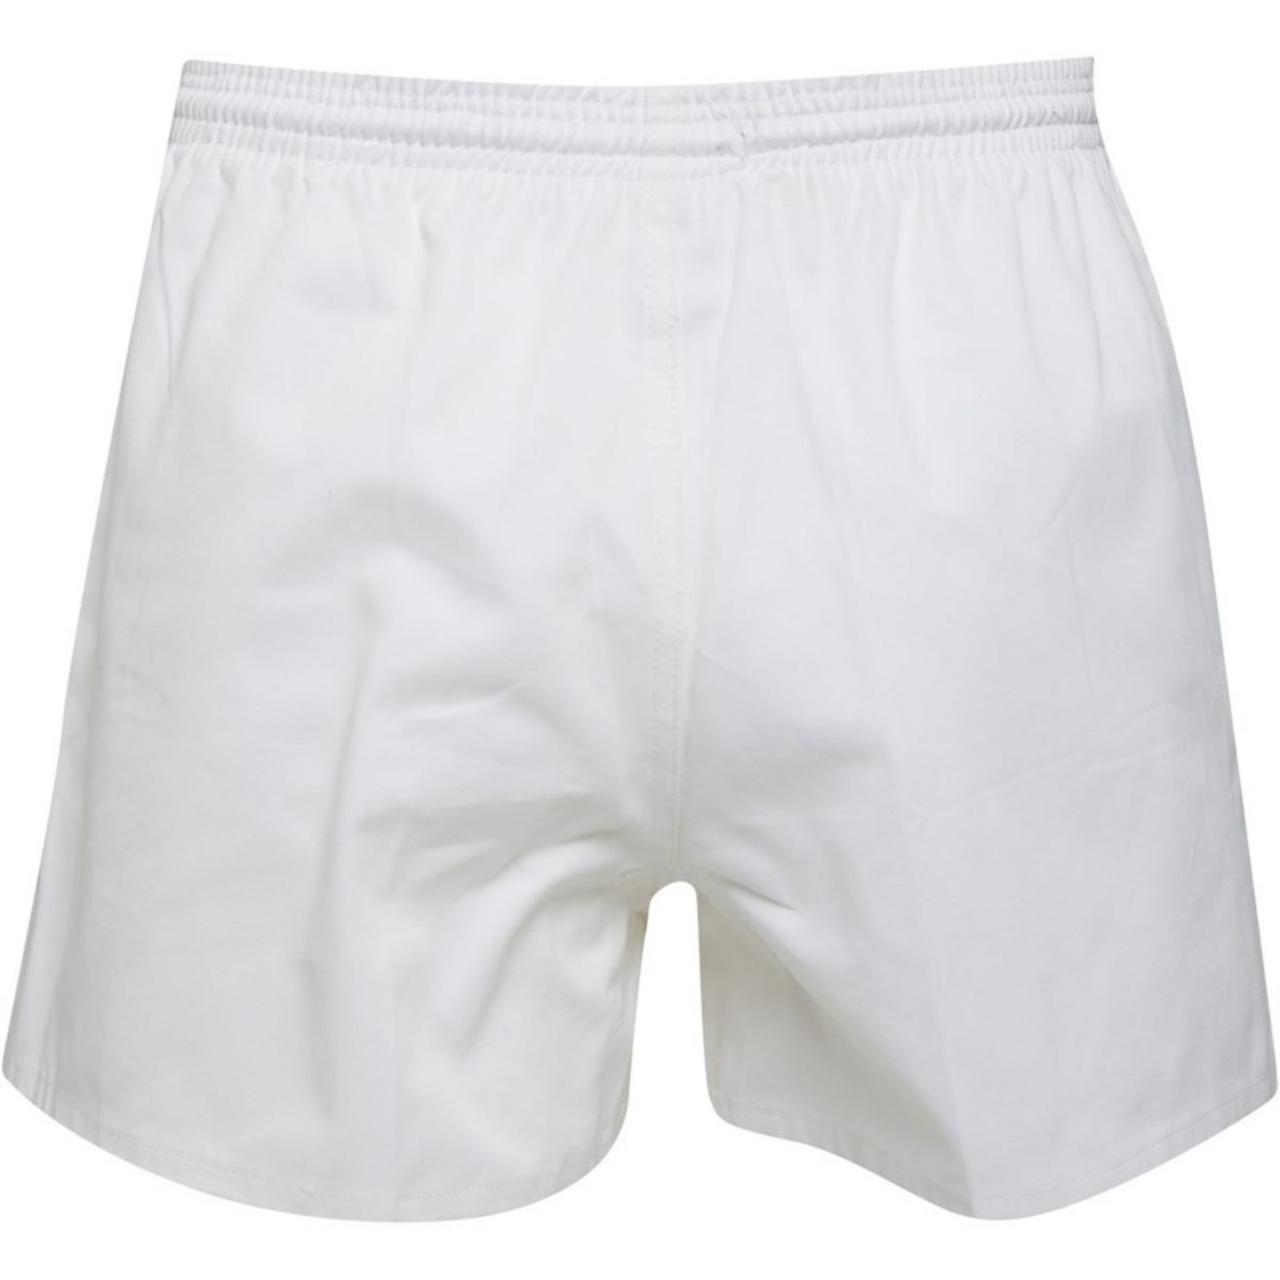 New Kooga Sports Rugby/Tennis Shorts Size 3XL Brand... - Depop